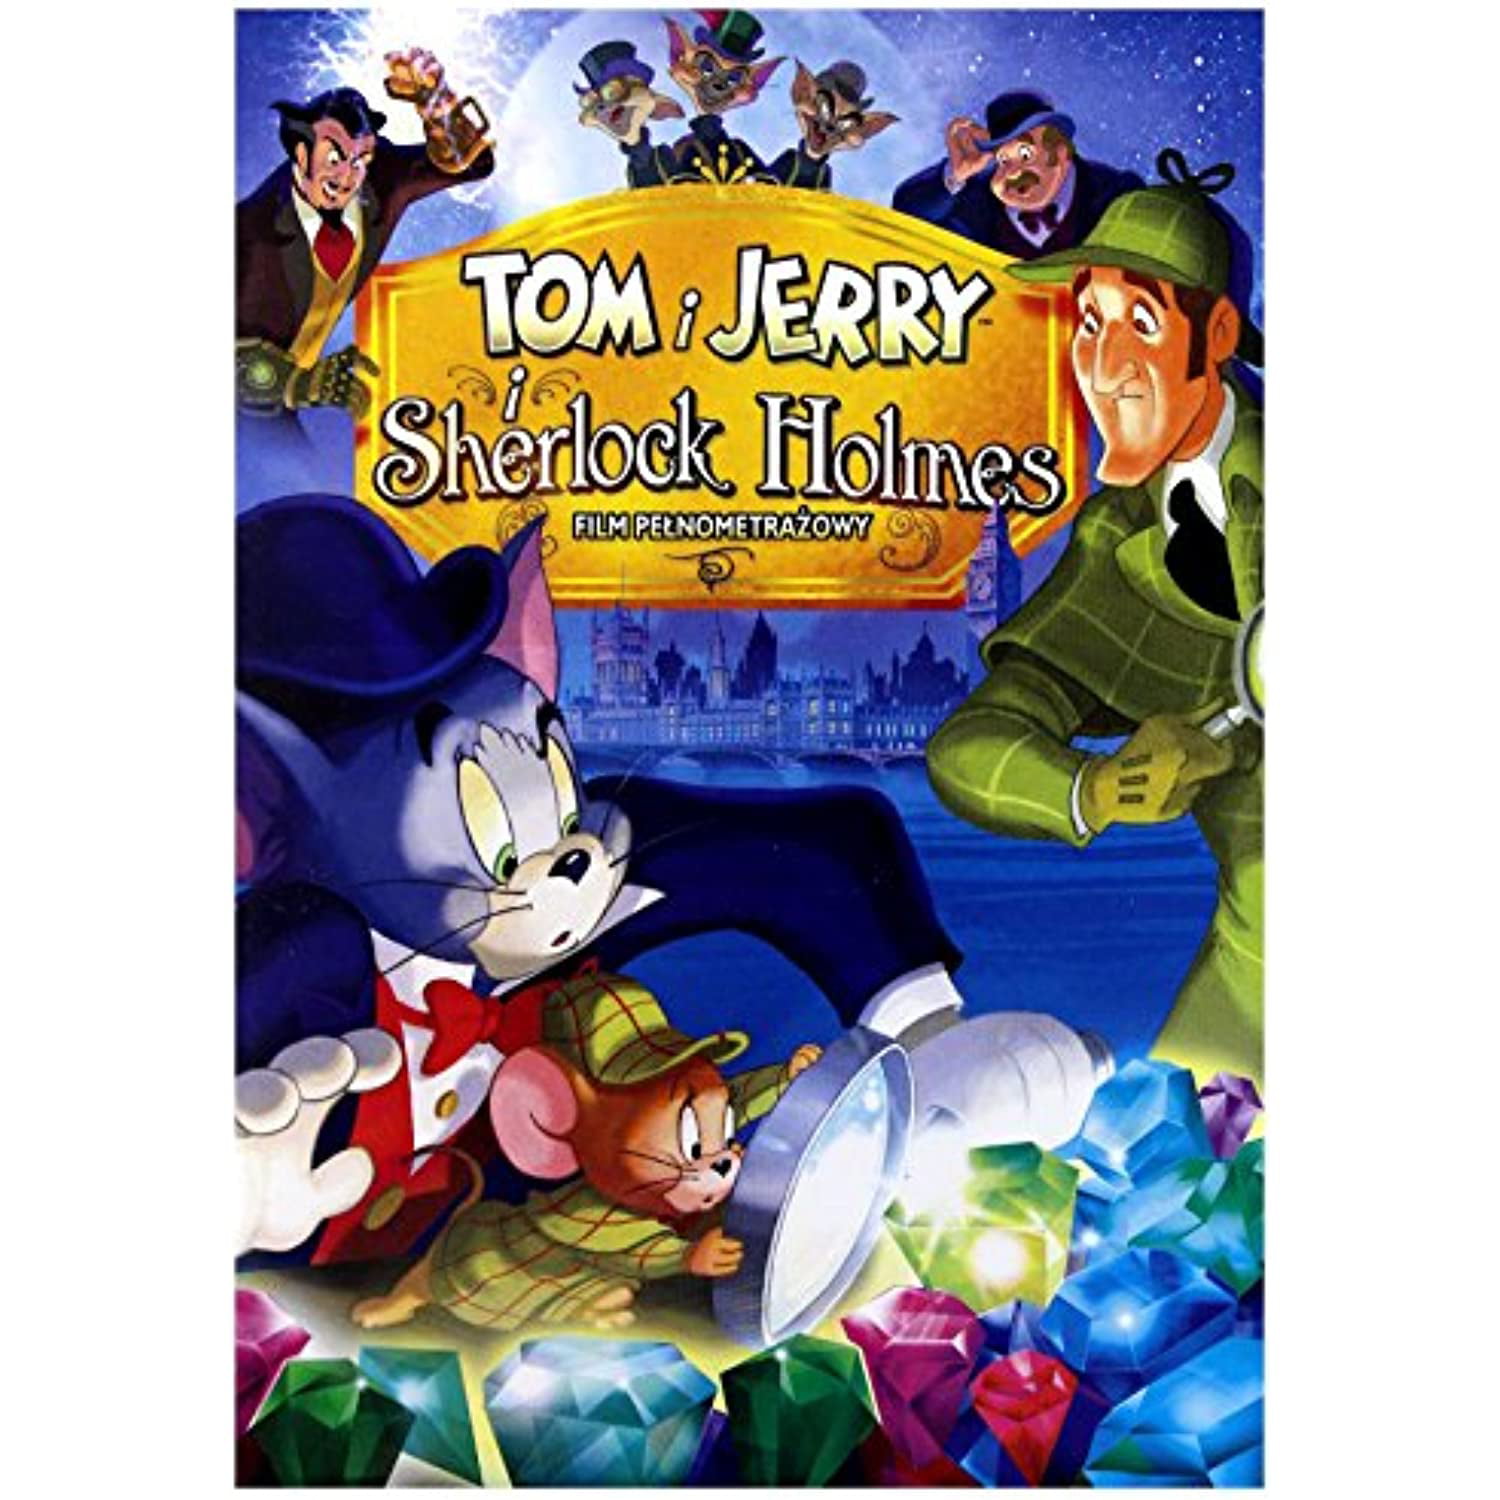 Tom & Jerry Sherlock Holmes [Dvd] (English Audio. English Subtitles) -  